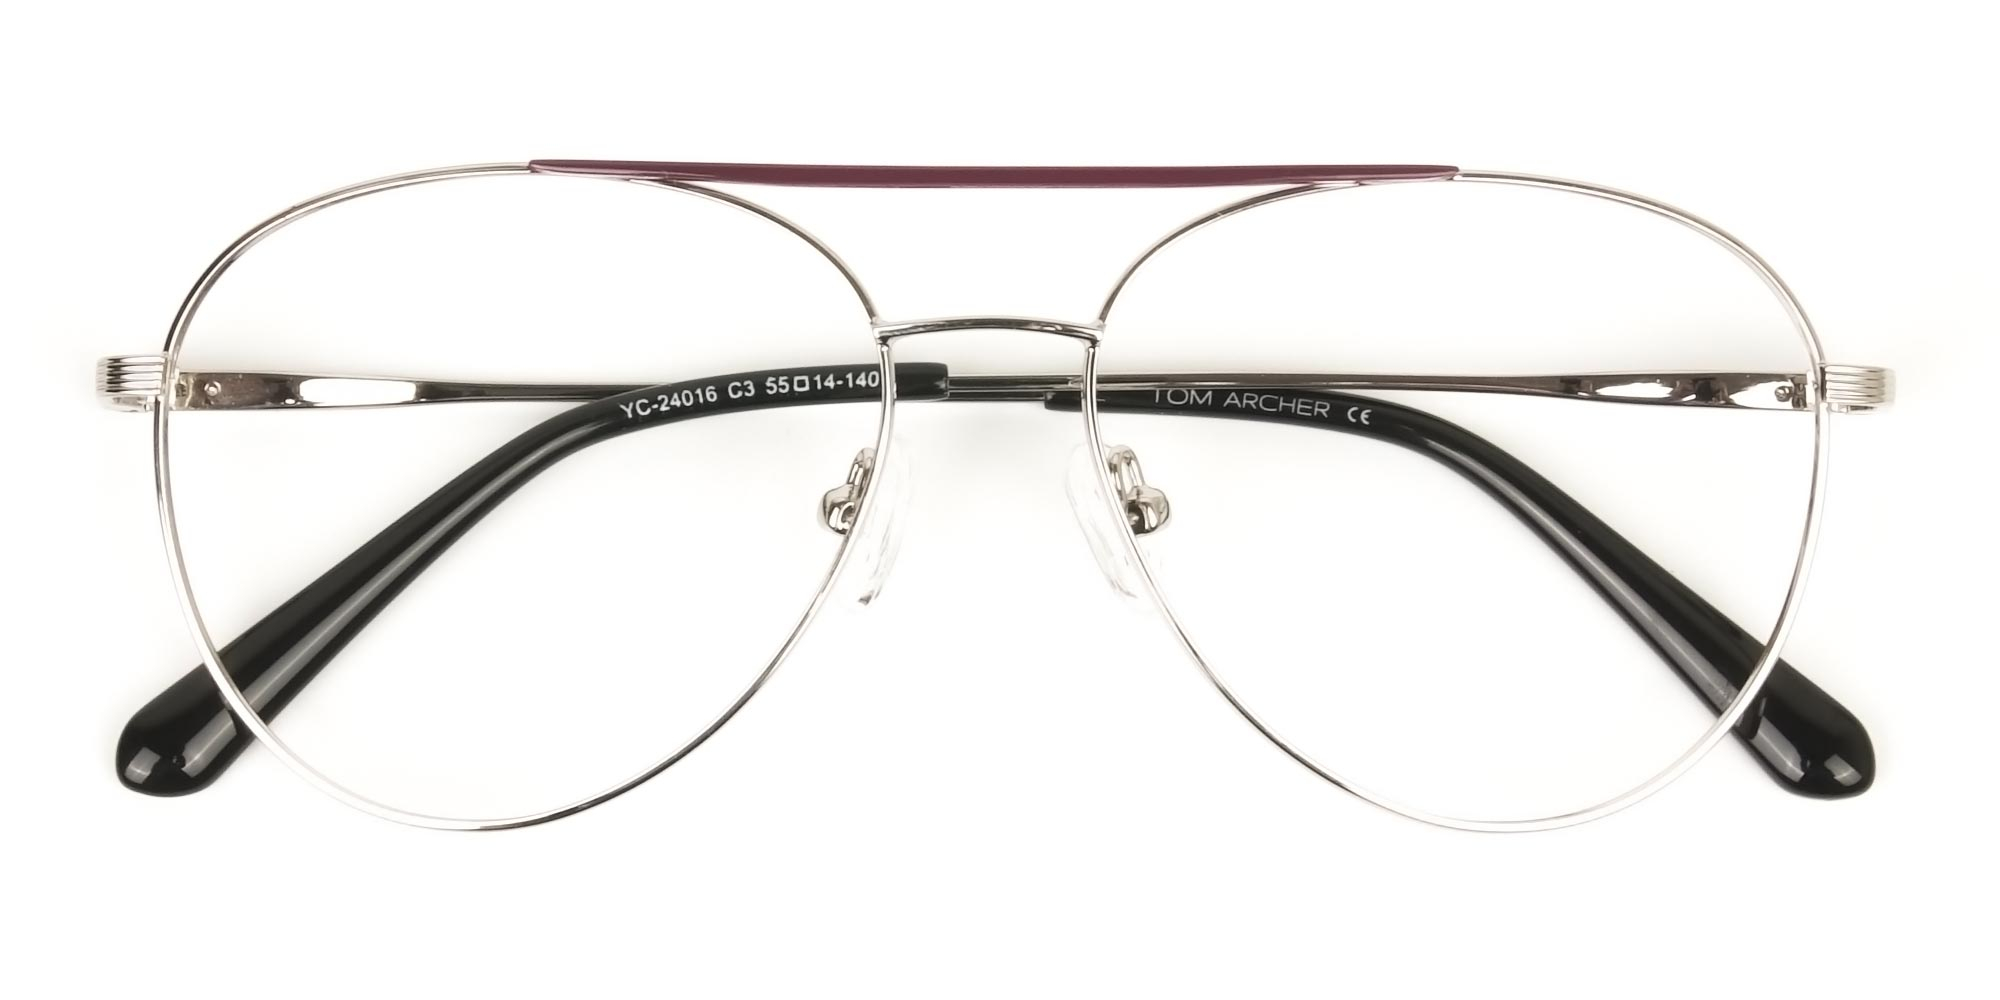 Silver and Brown Flat Bridge Aviator Glasses - 1